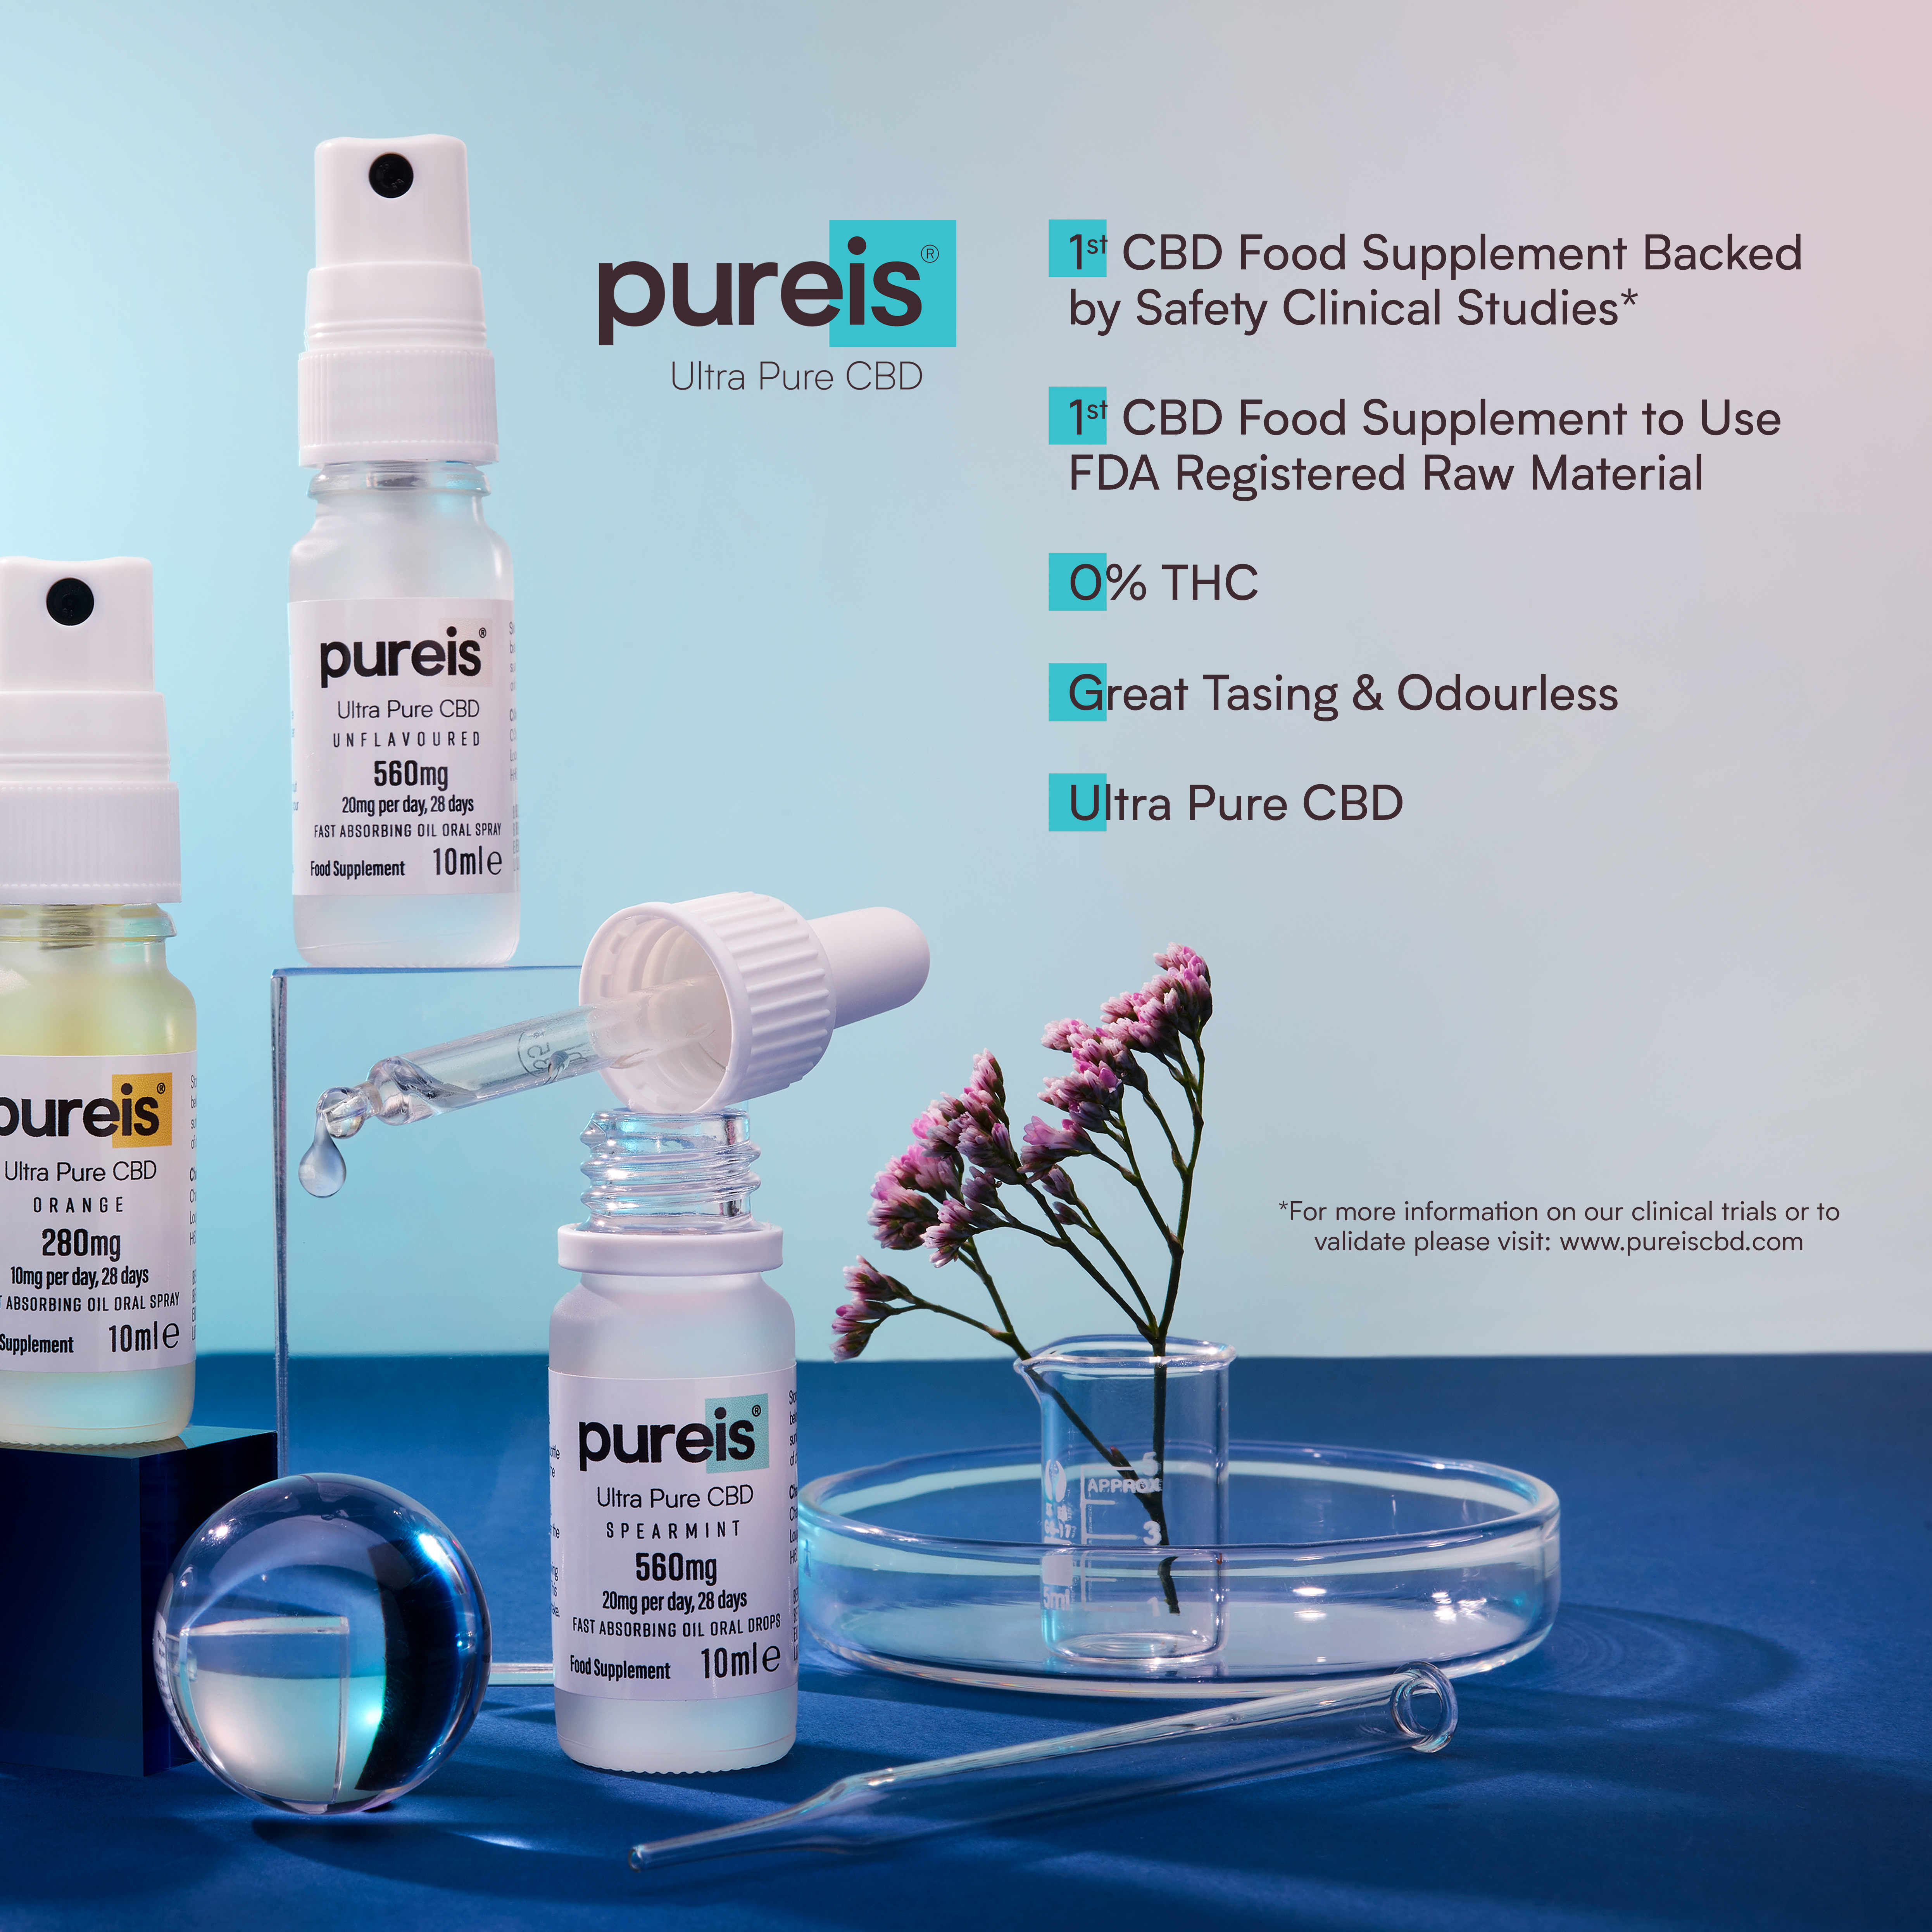 About Pureis® Ultra Pure CBD